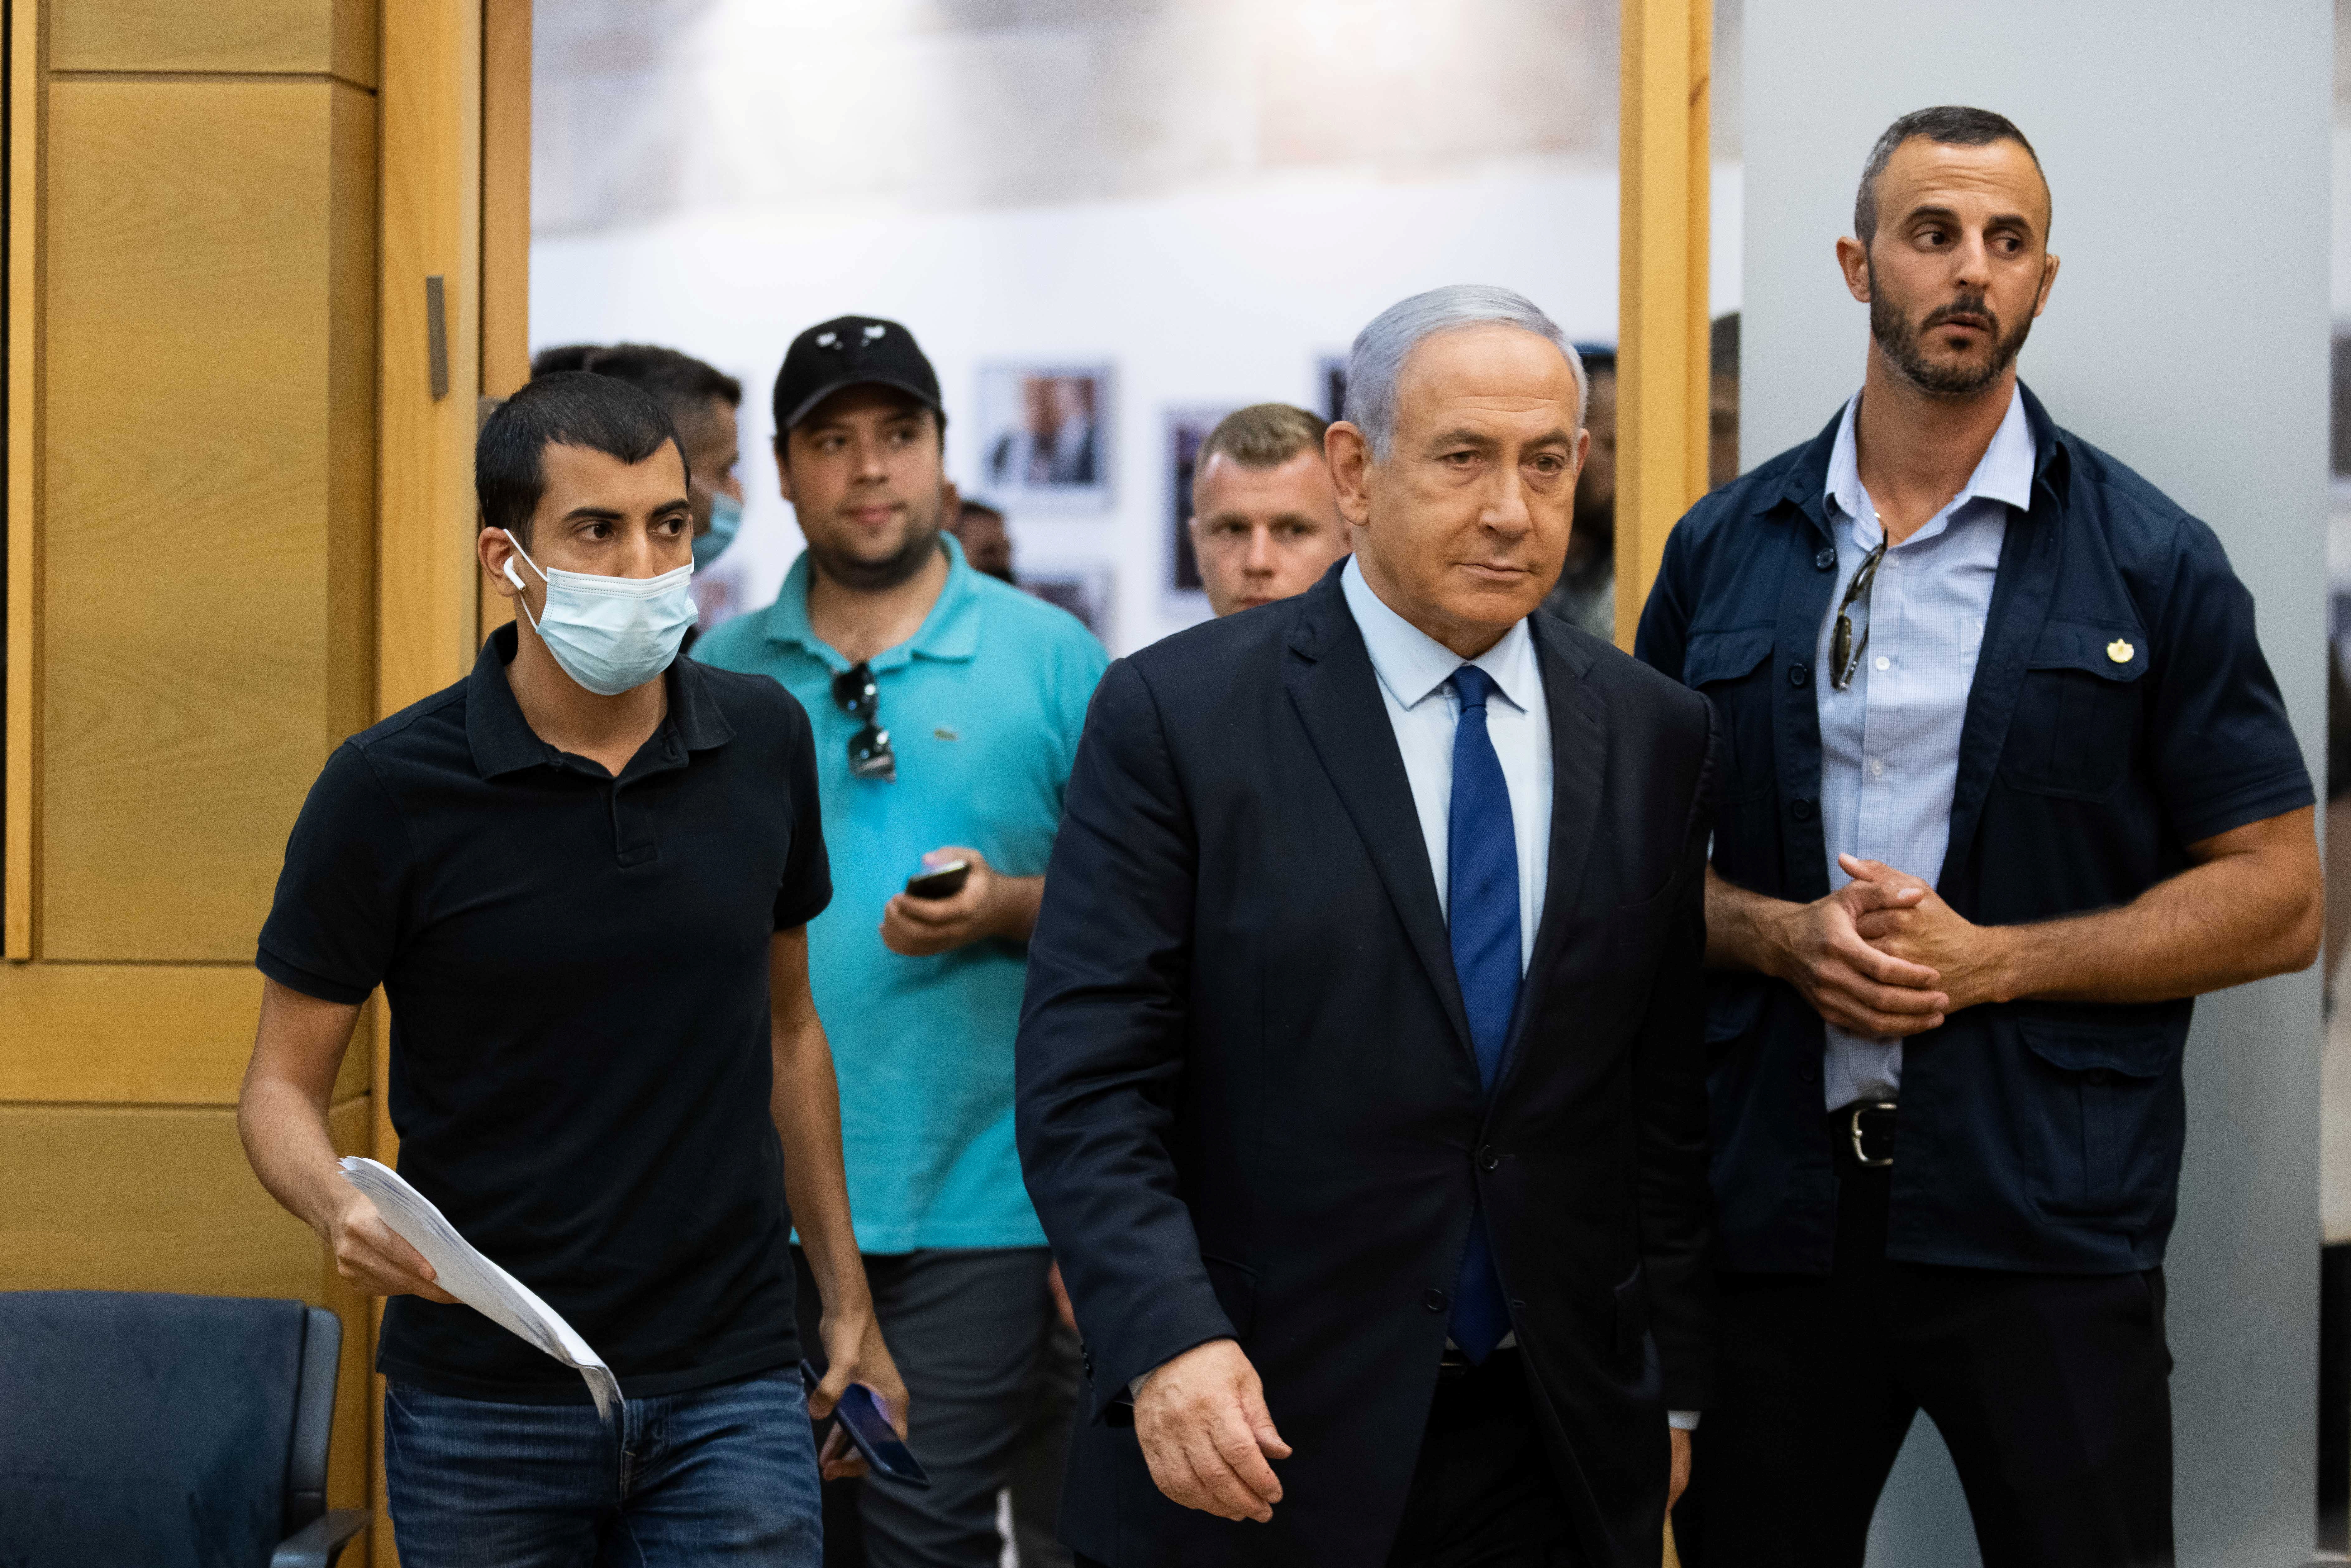 Israeli Prime Minister Benjamin Netanyahu arrives to deliver a statement in the Knesset, the Israeli Parliament, in Jerusalem